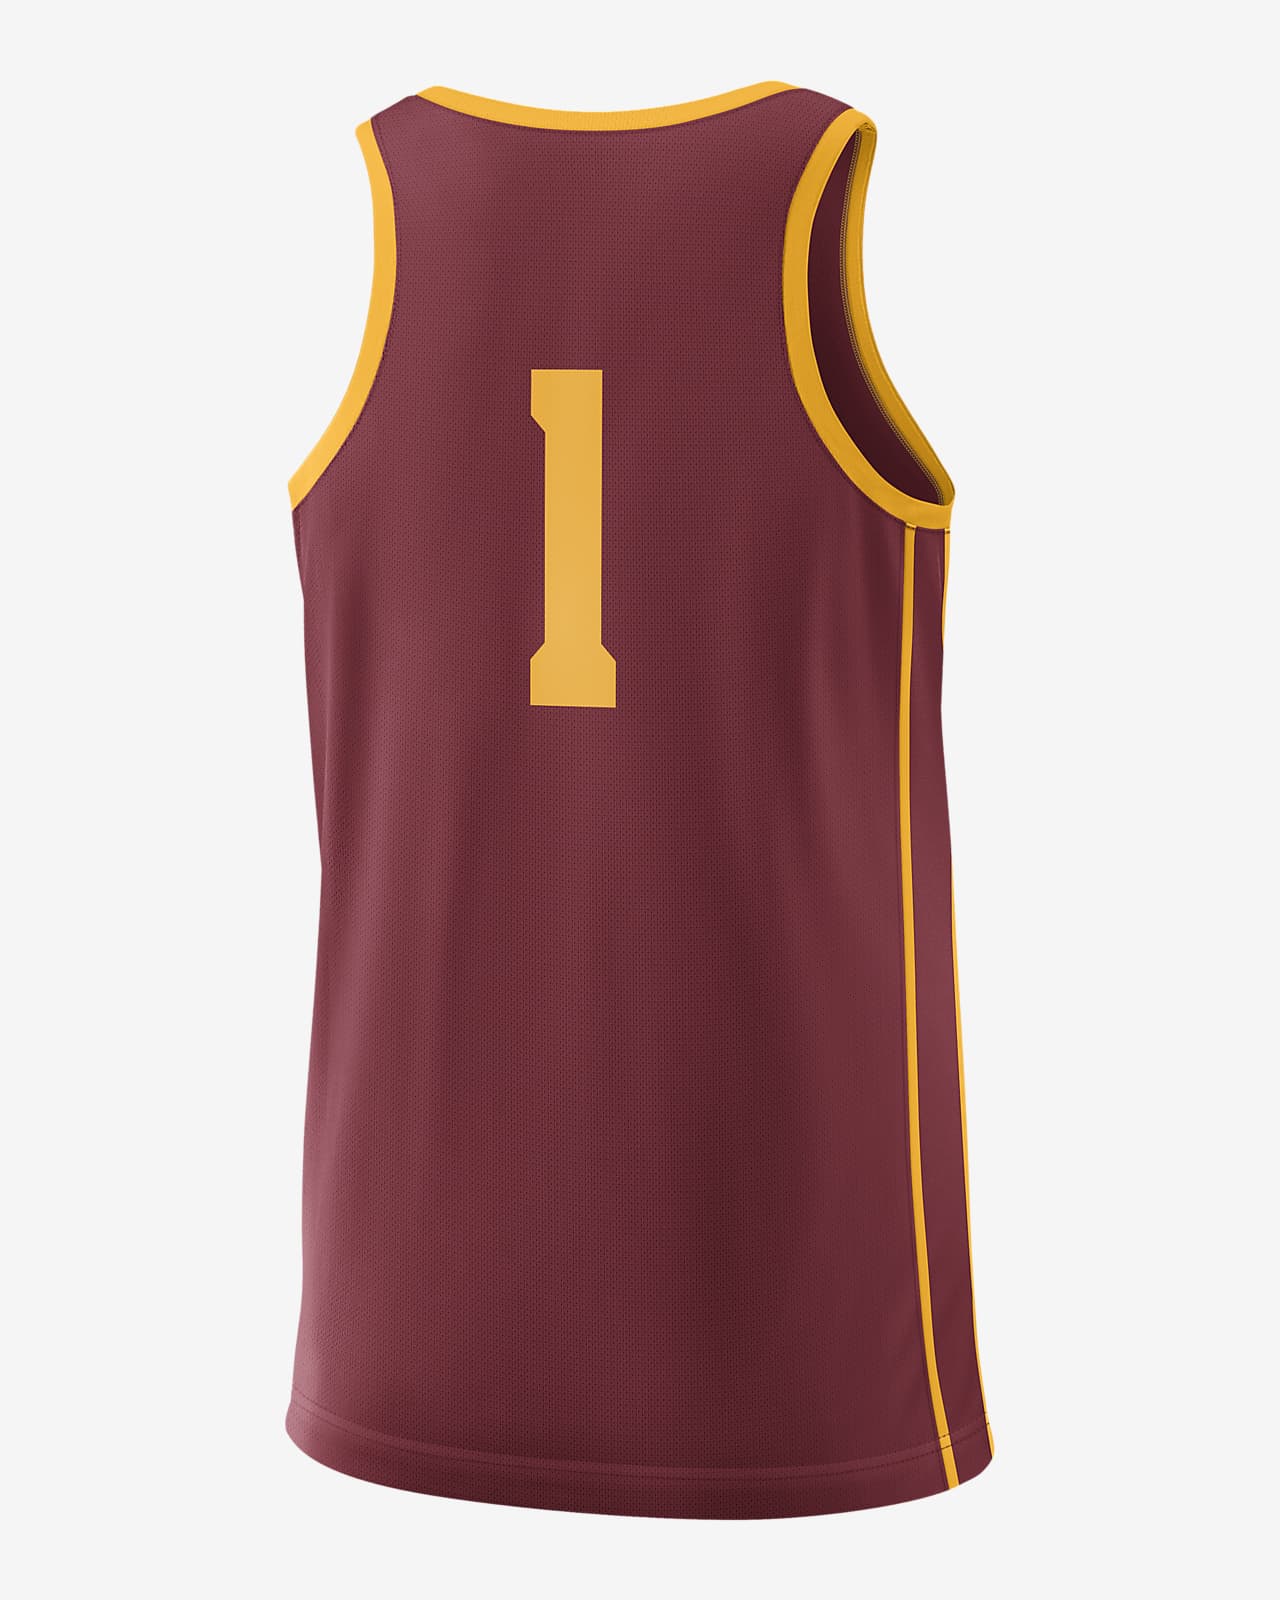 Nike College Dri-FIT (USC) Men's Replica Basketball Jersey